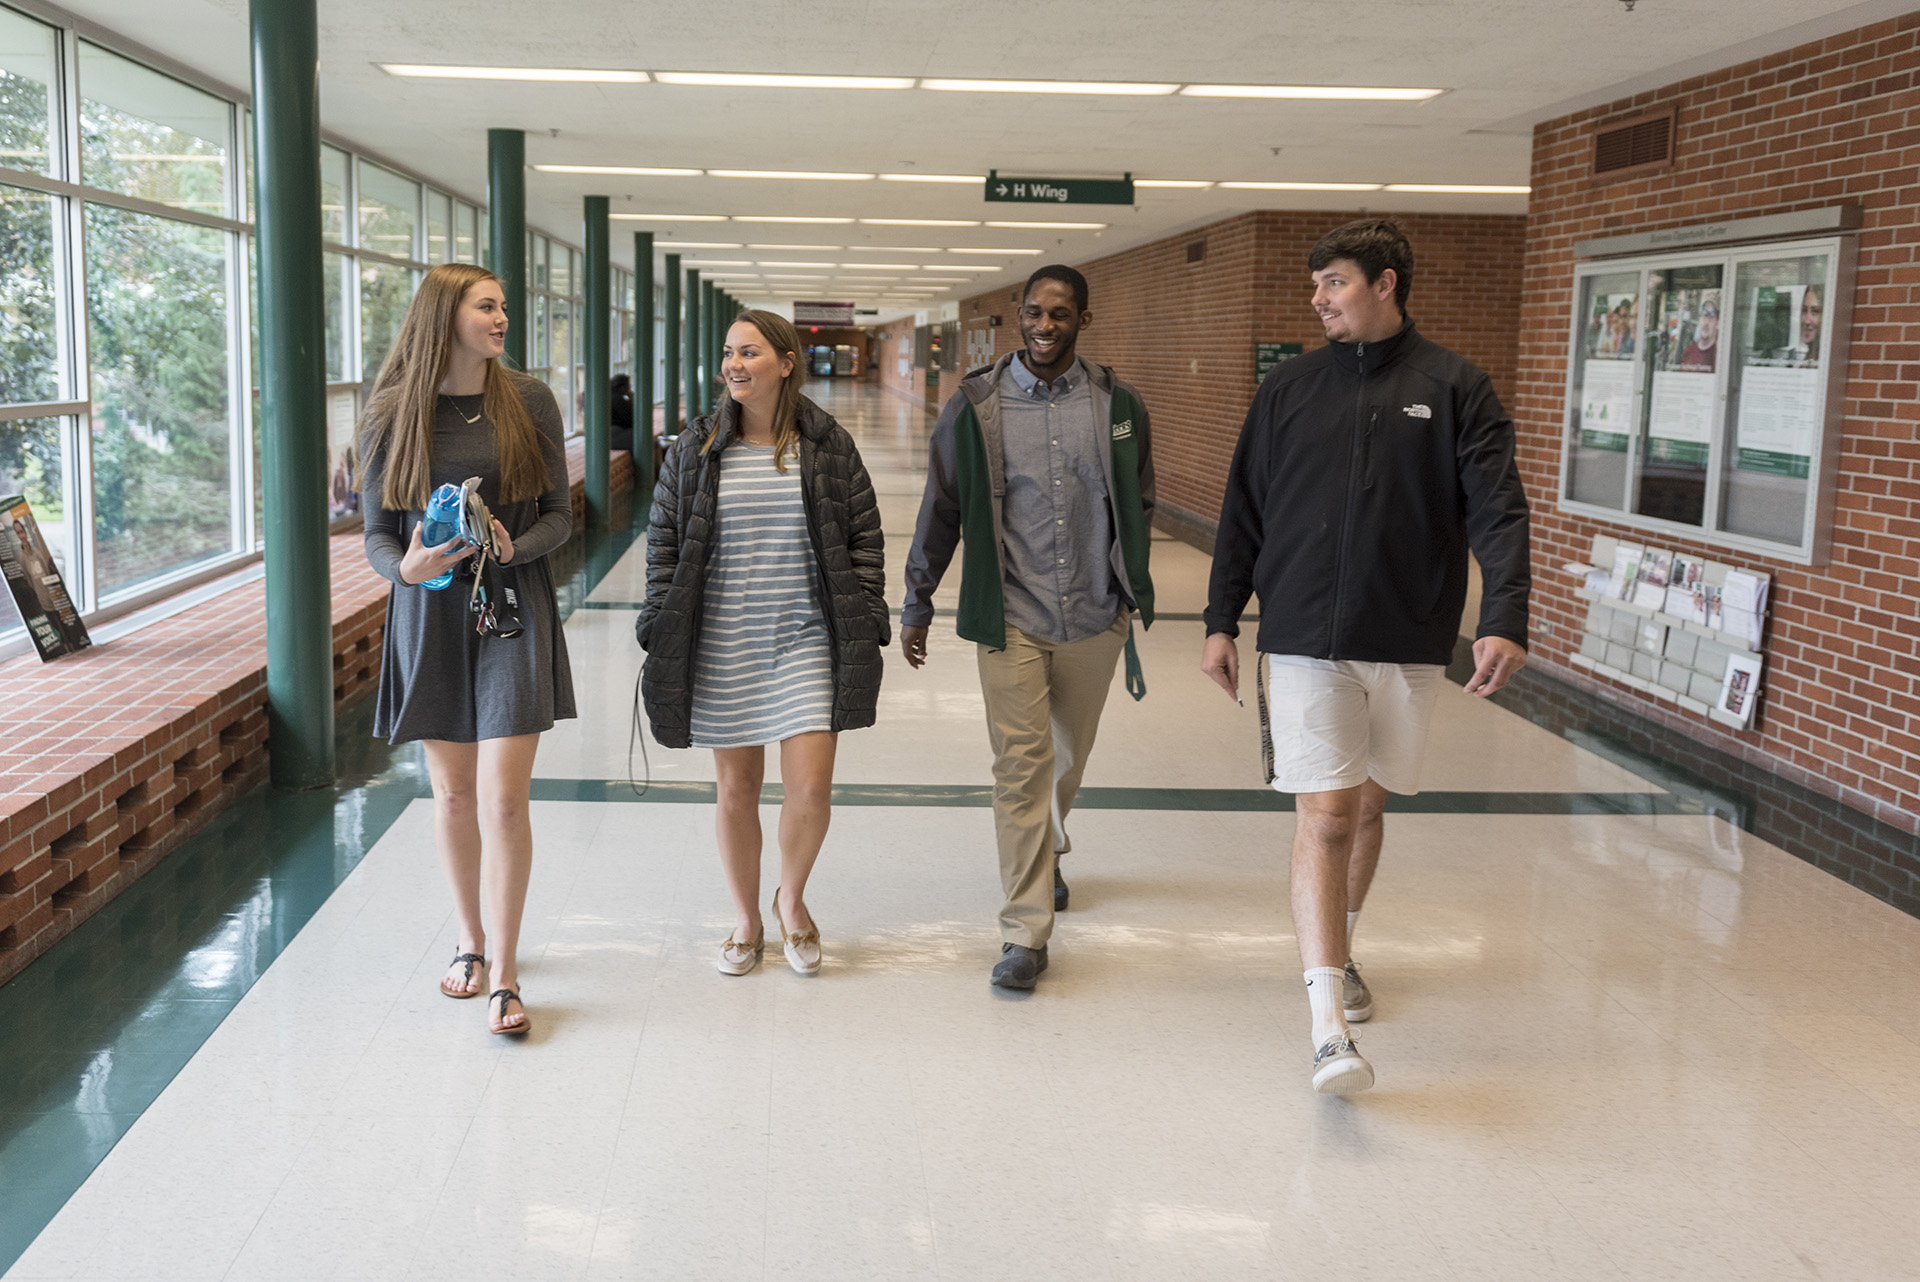 Students walking through the halls